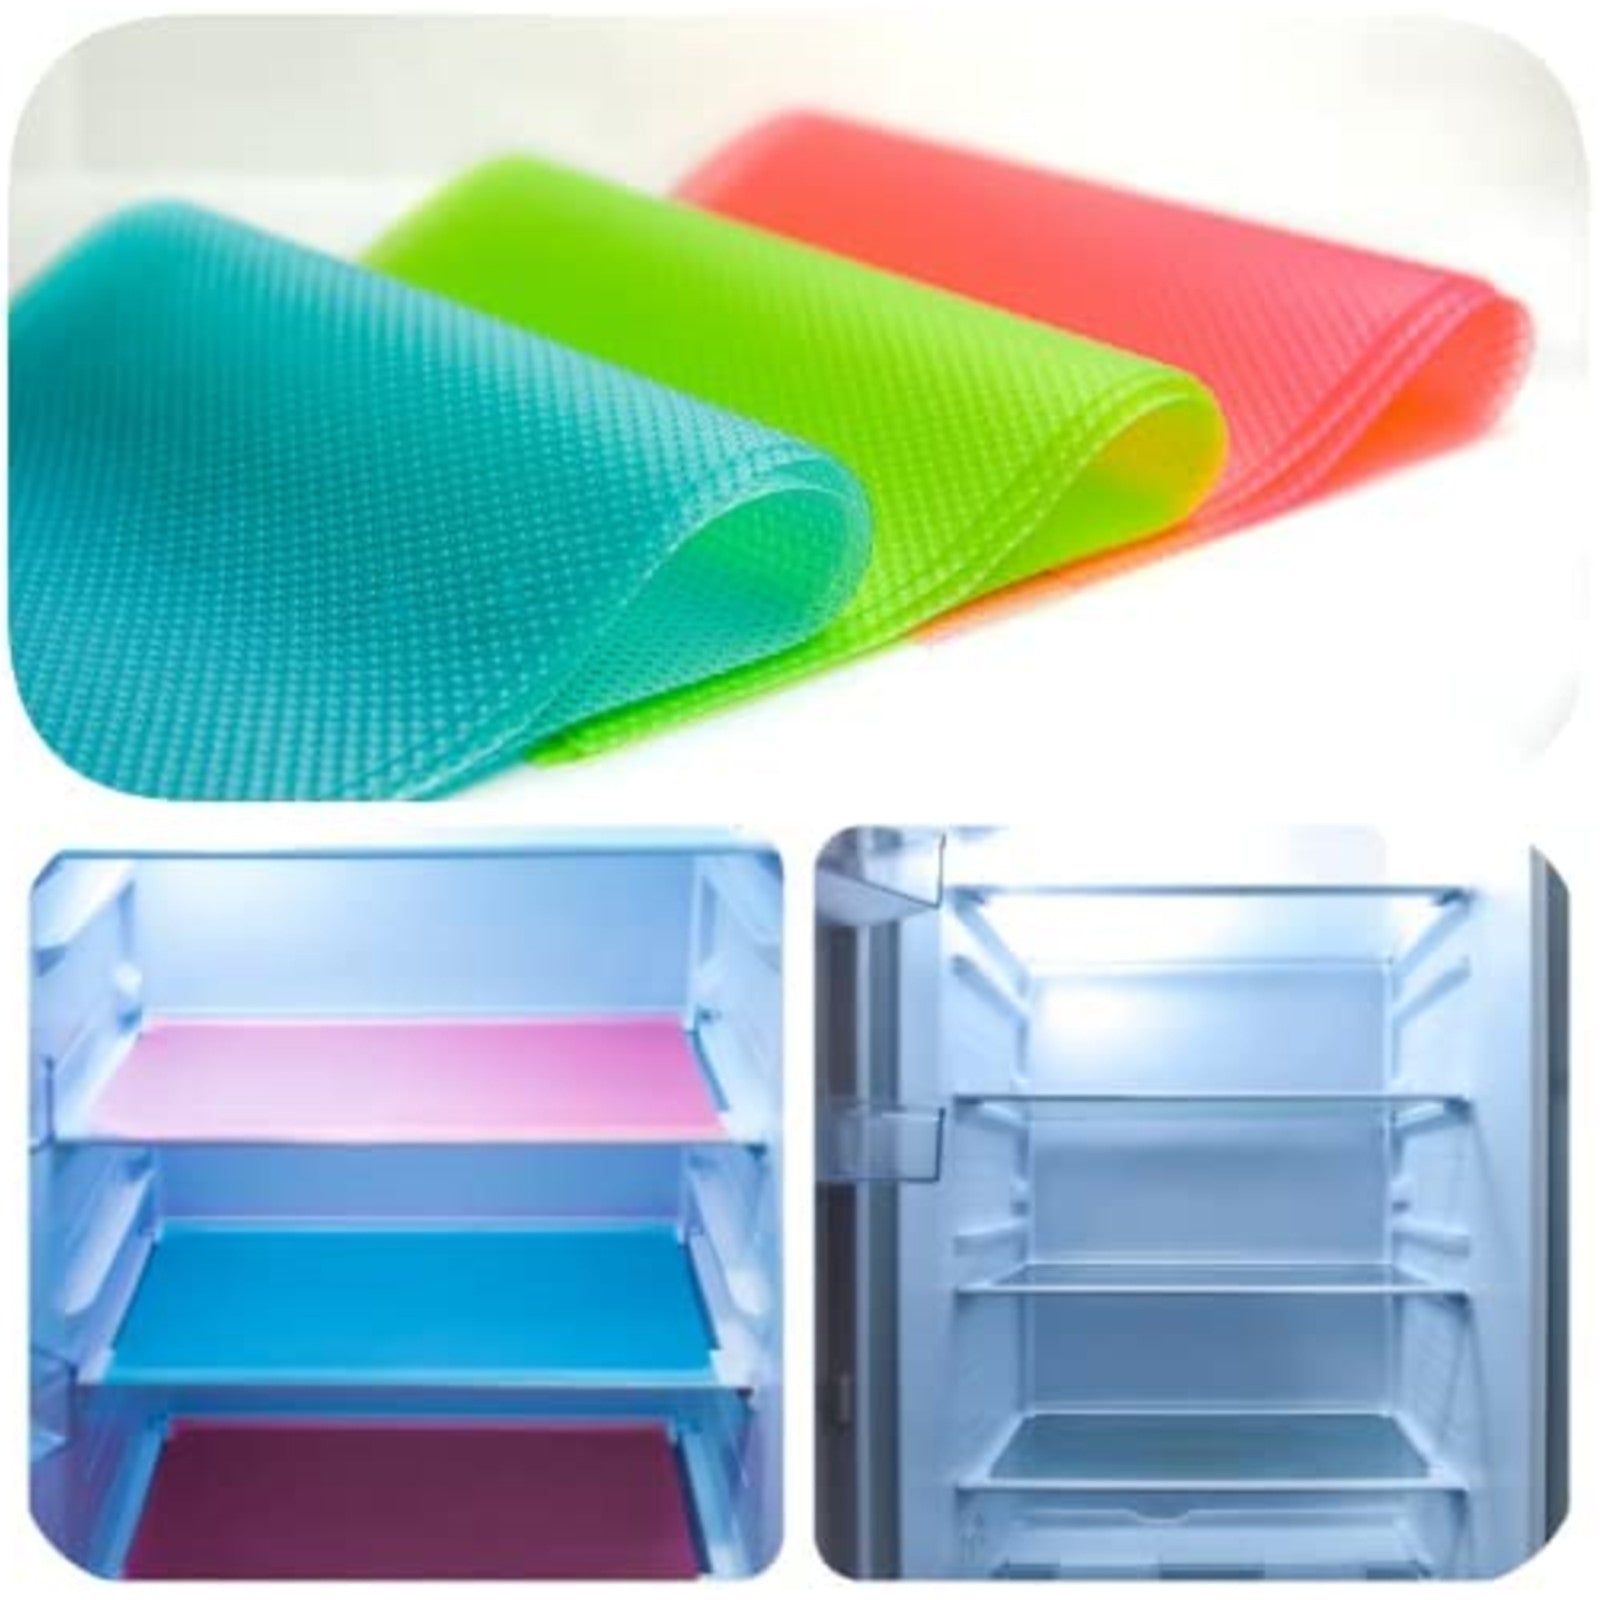 3 Pcs 5ft Refrigerator Mats EVA Shelf Liners For Glass Shelves Washable Pads Liners For Refrigerator, 1 Green 1 Blue 1 Red